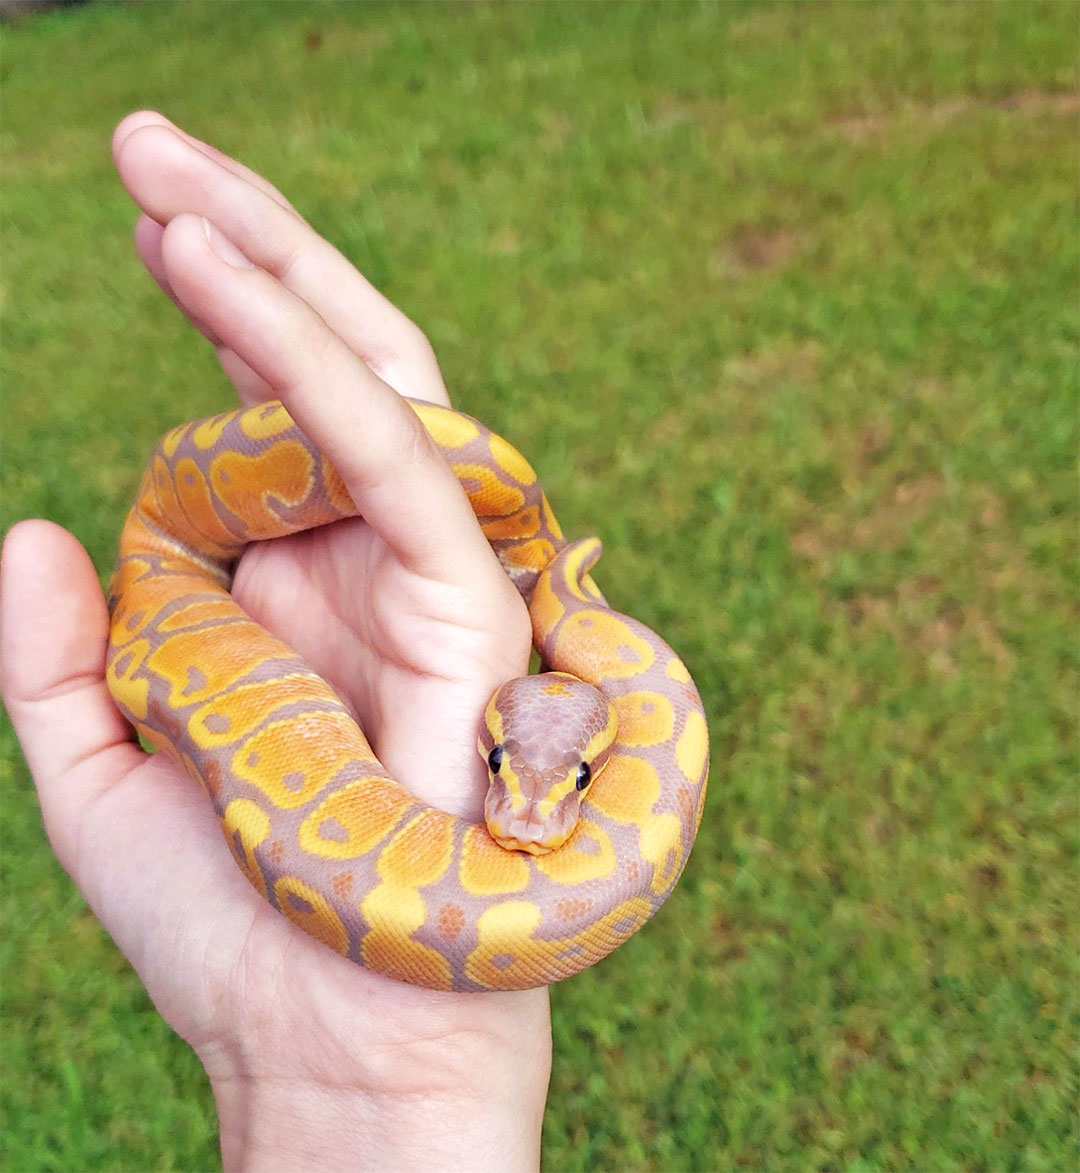 Handling a ball python